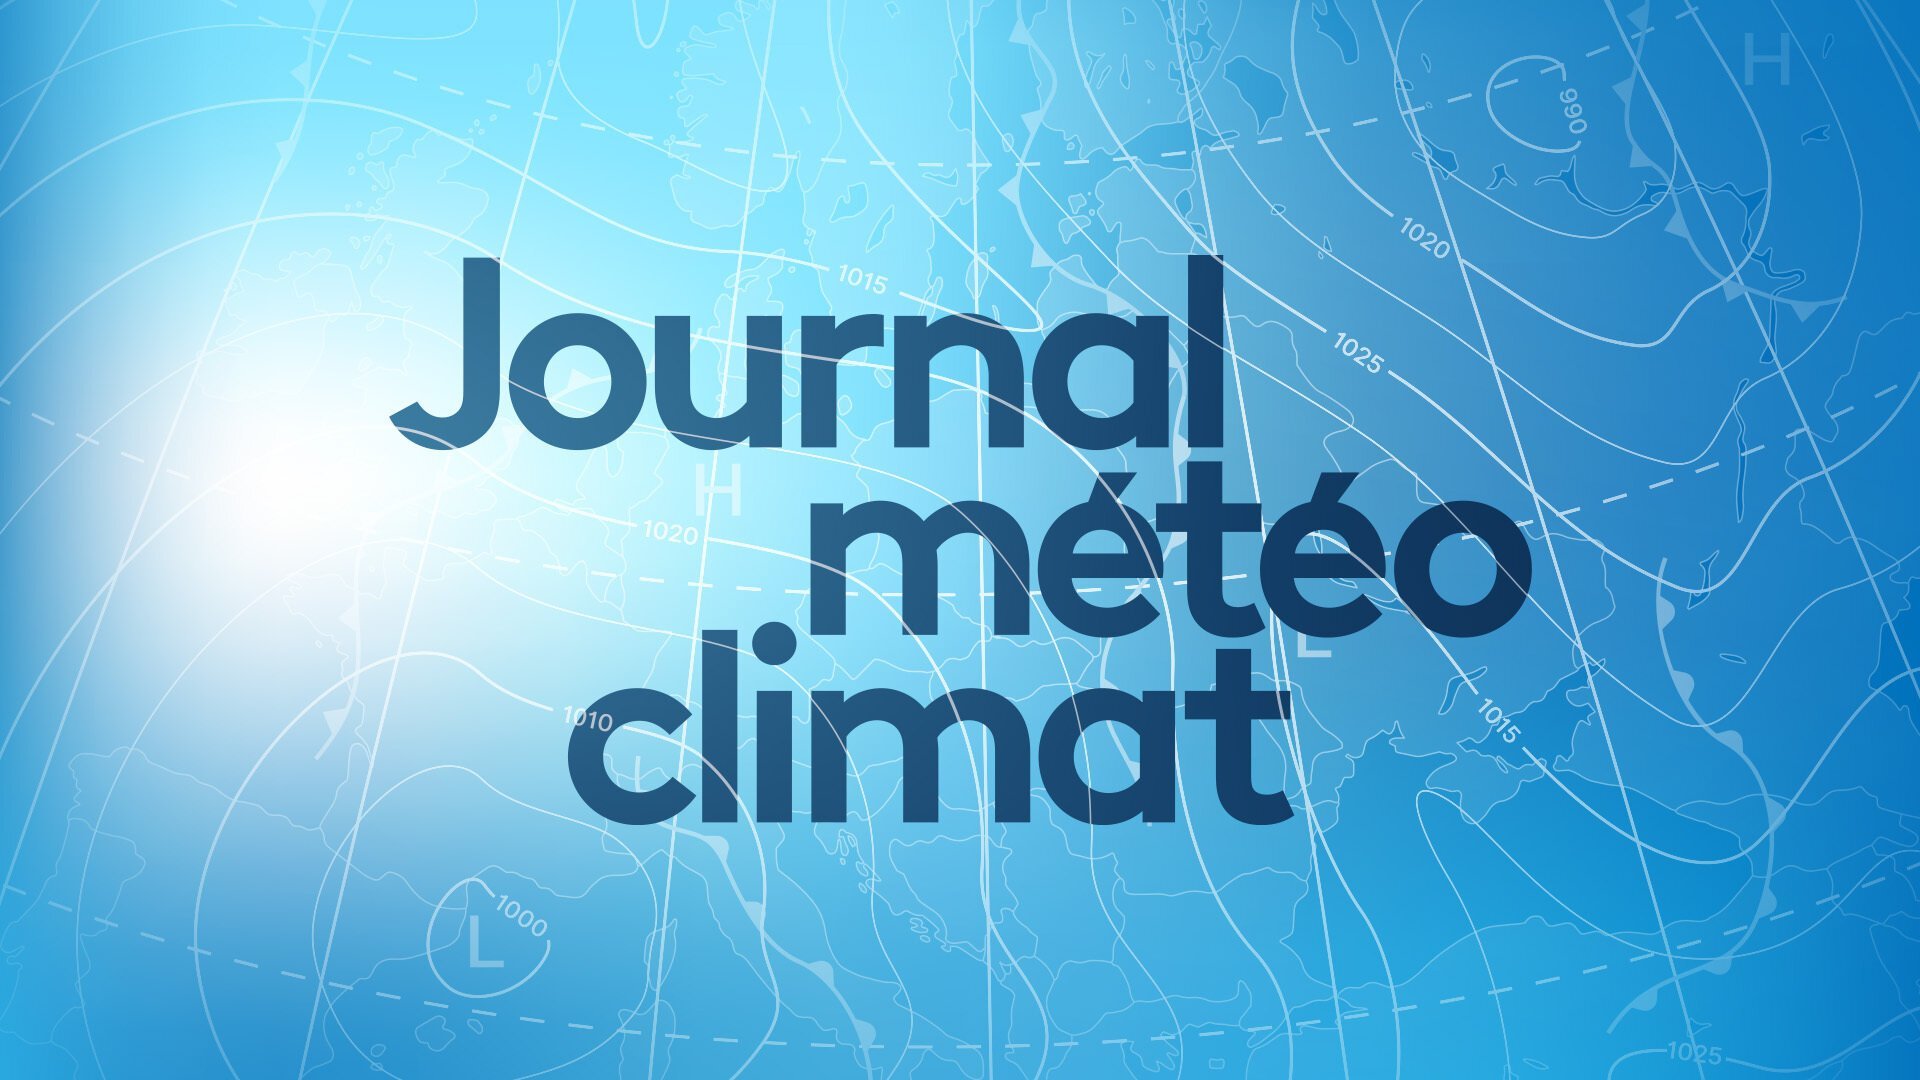 Journal météo climat – France 2 & France 3